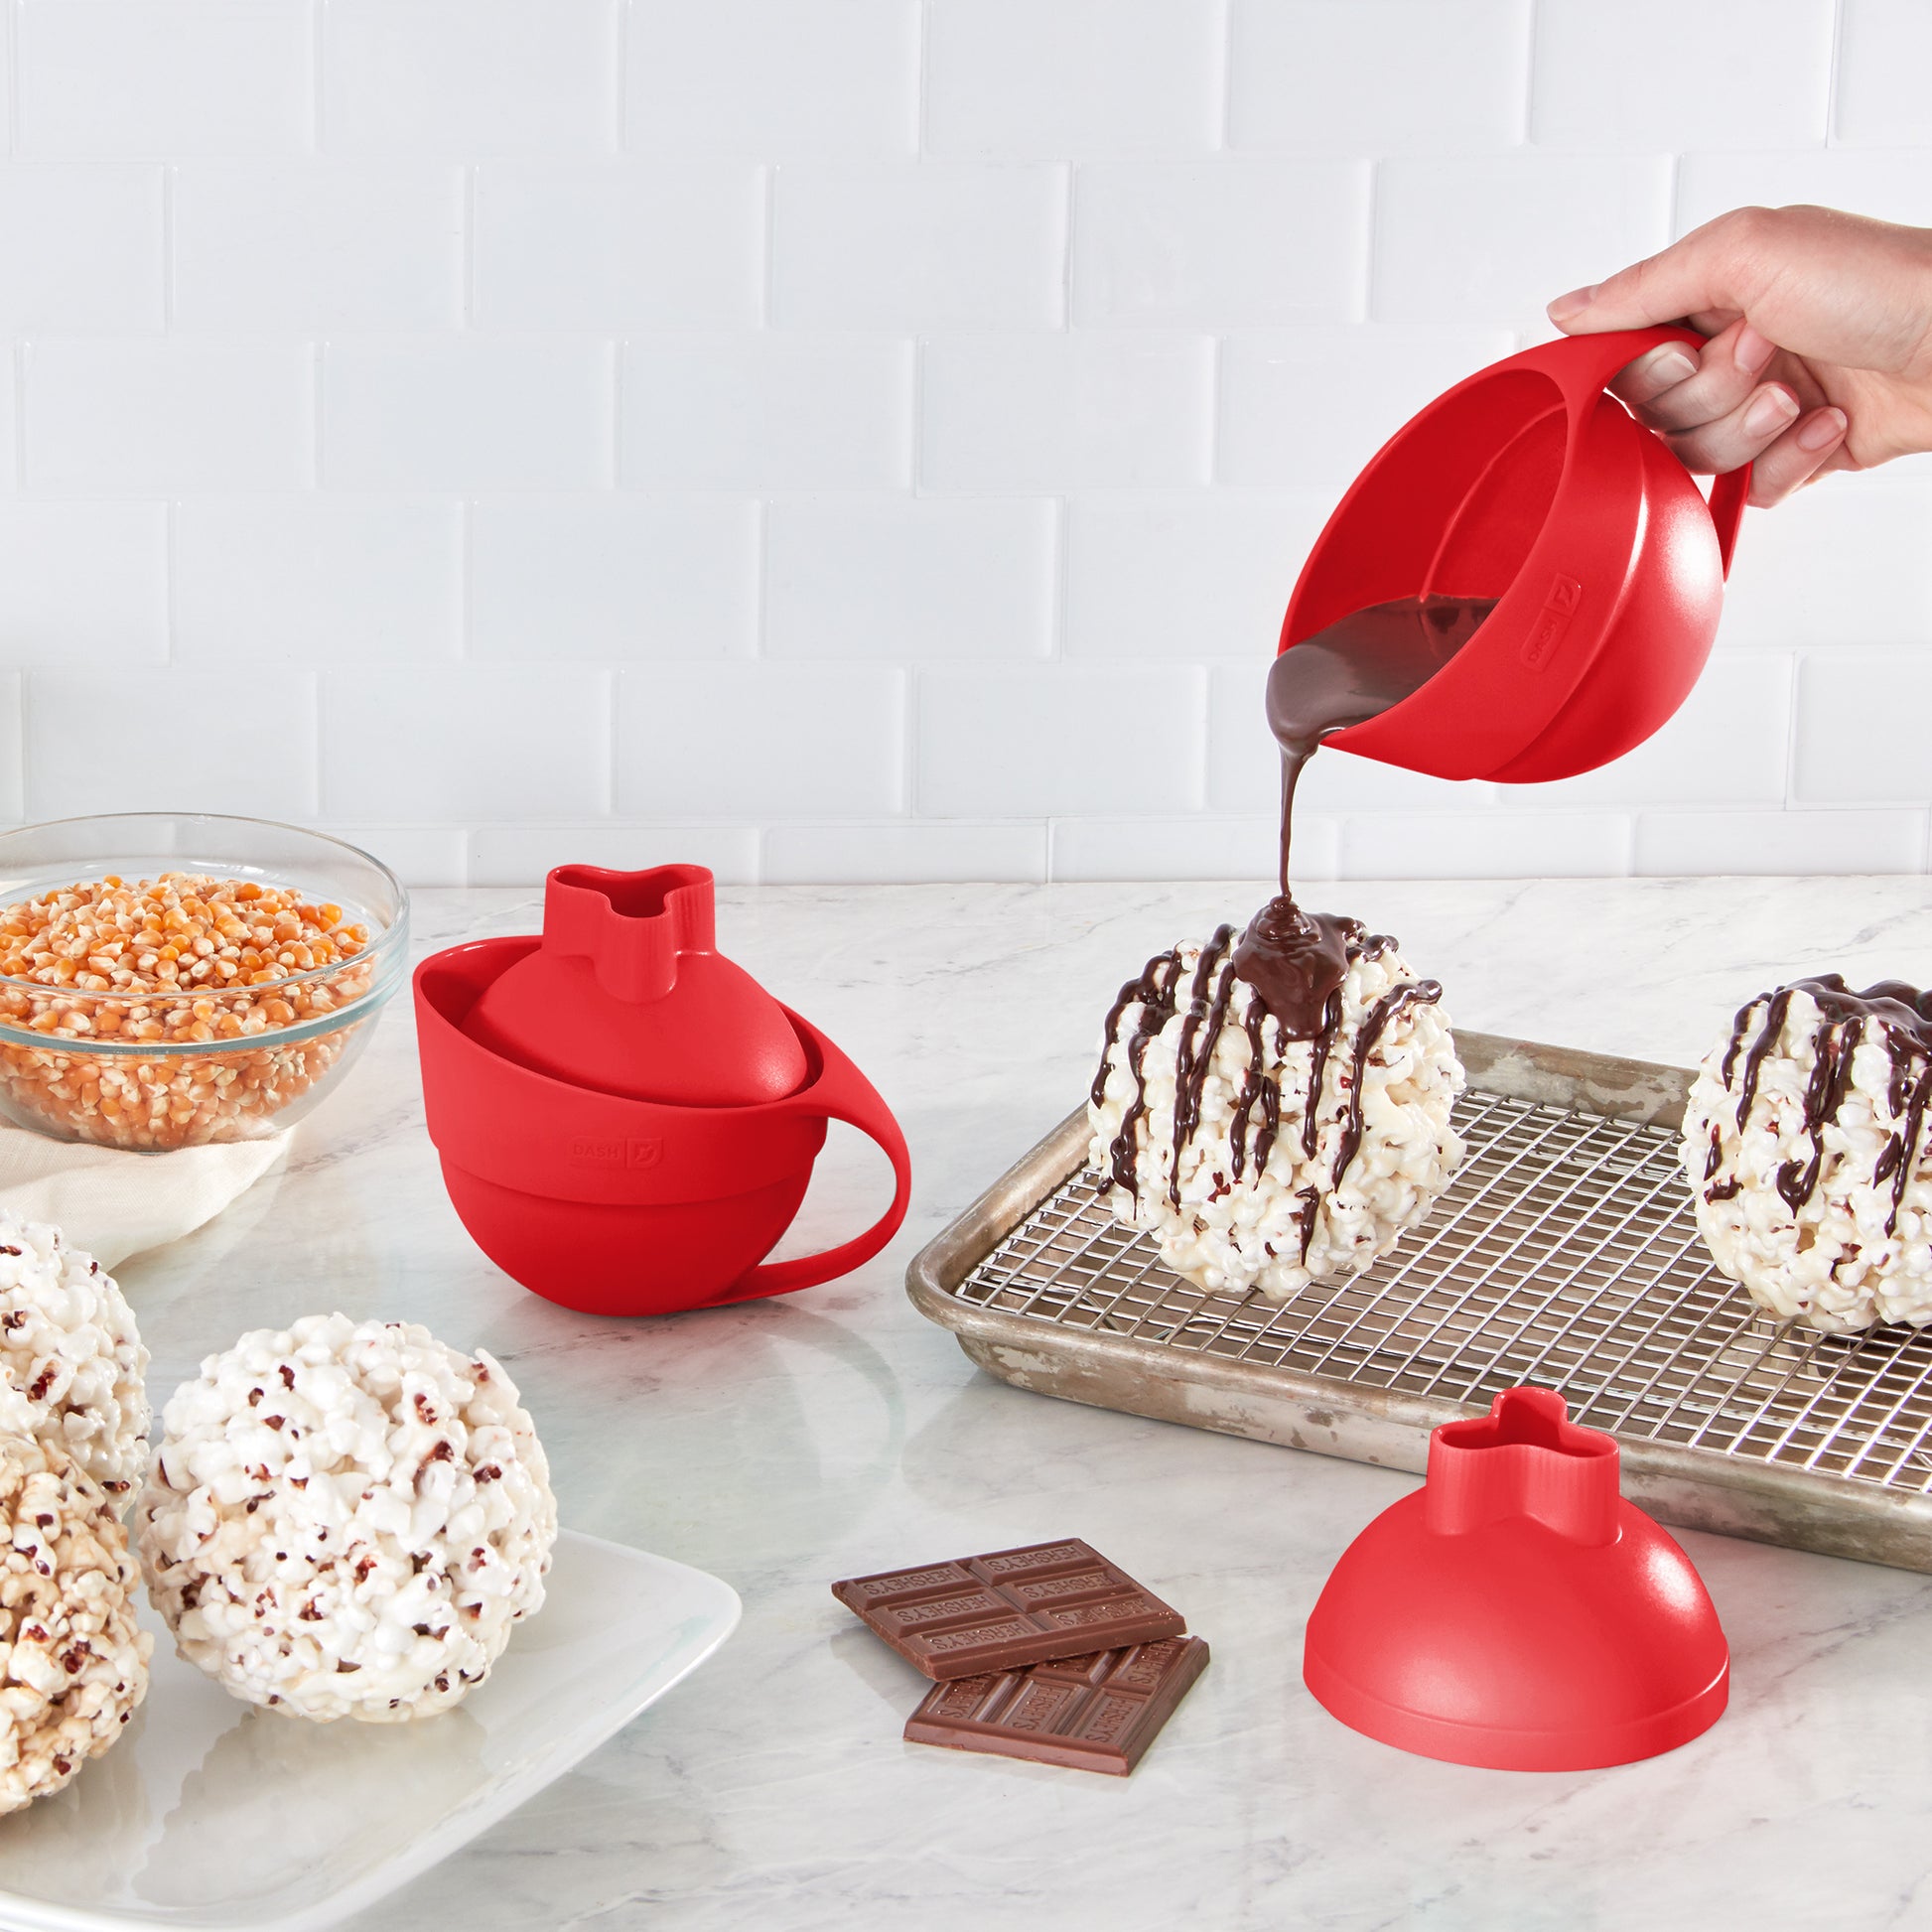 Dash SmartStore Stirring Popcorn Maker with Popcorn Ball Makers